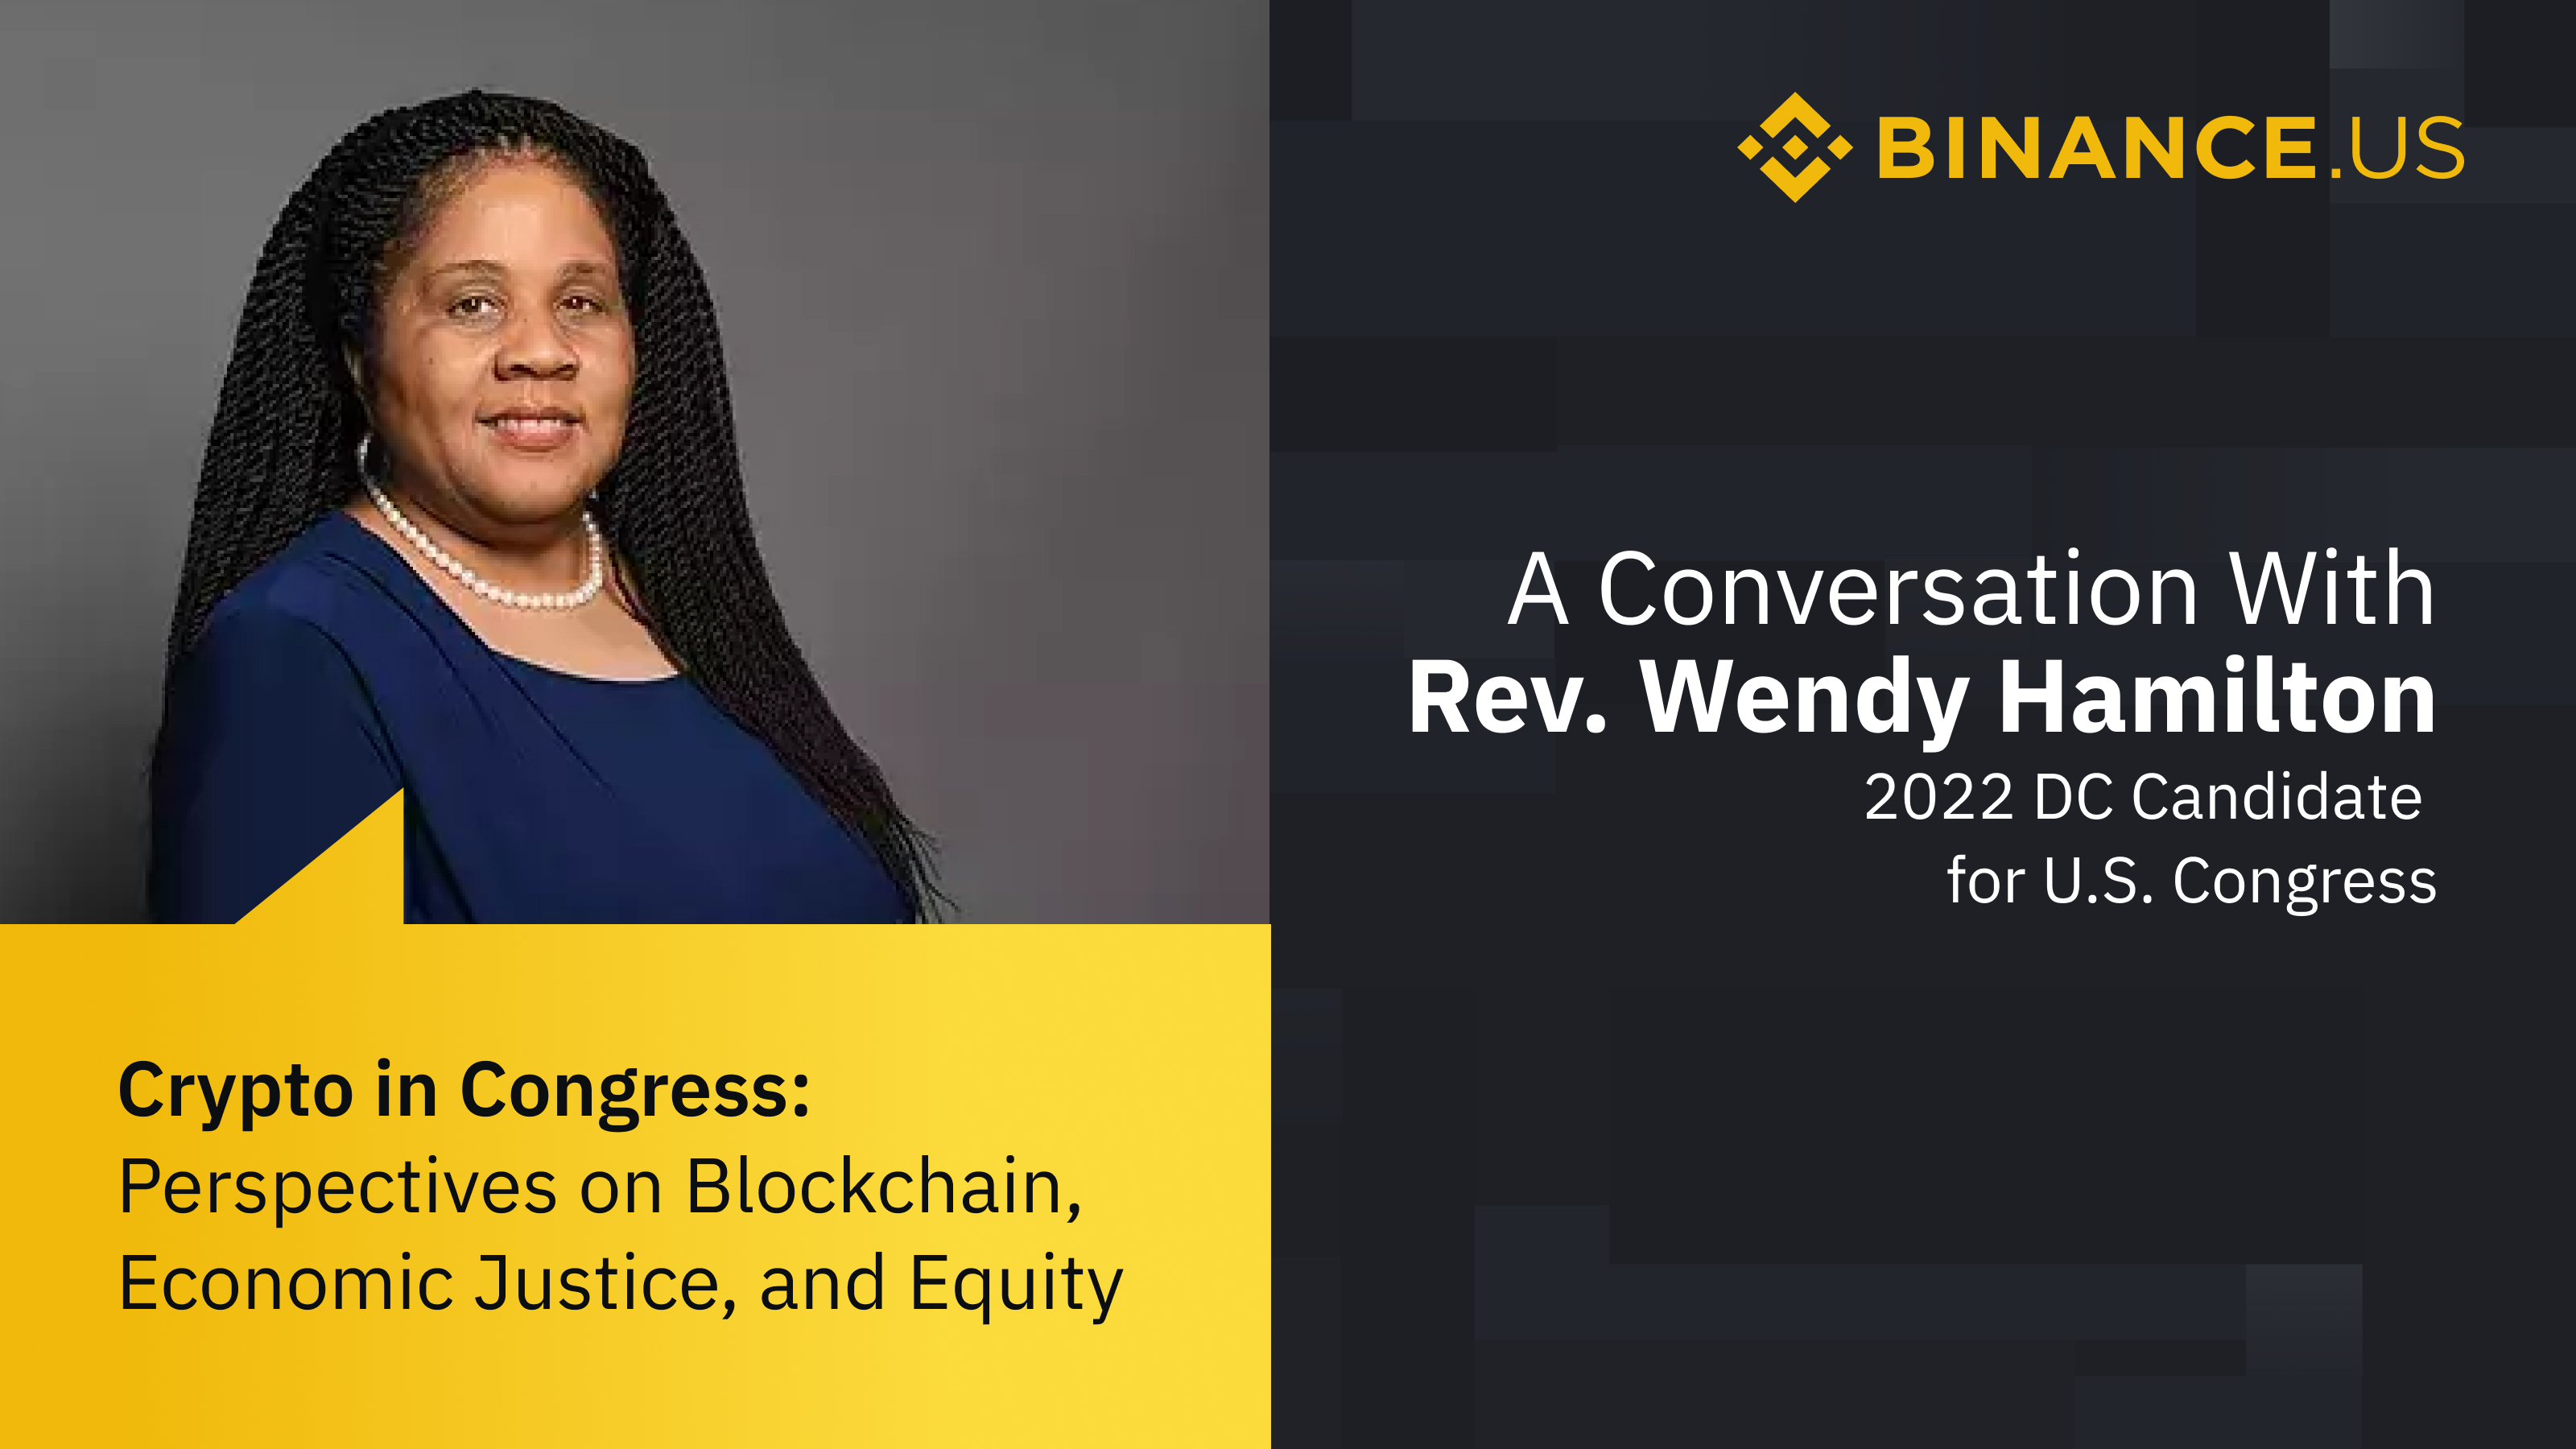 Crypto in Congress: A Conversation With Rev. Wendy Hamilton